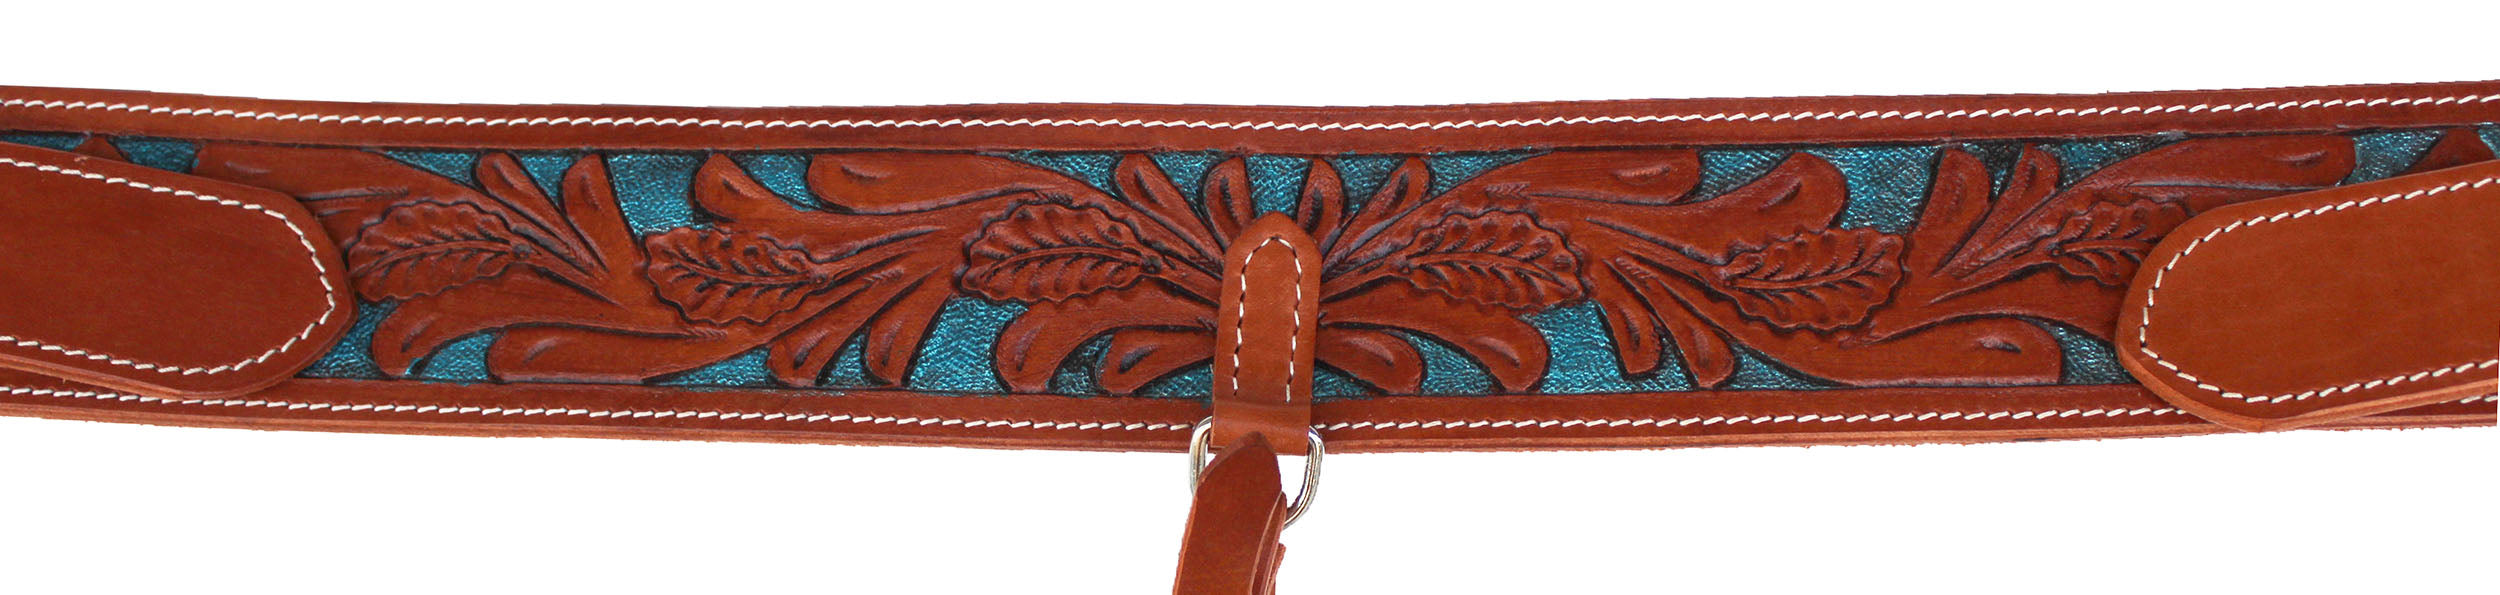 Horse Western Floral Tooled Leather Rear Flank Saddle Cinch w/ Billets 9778